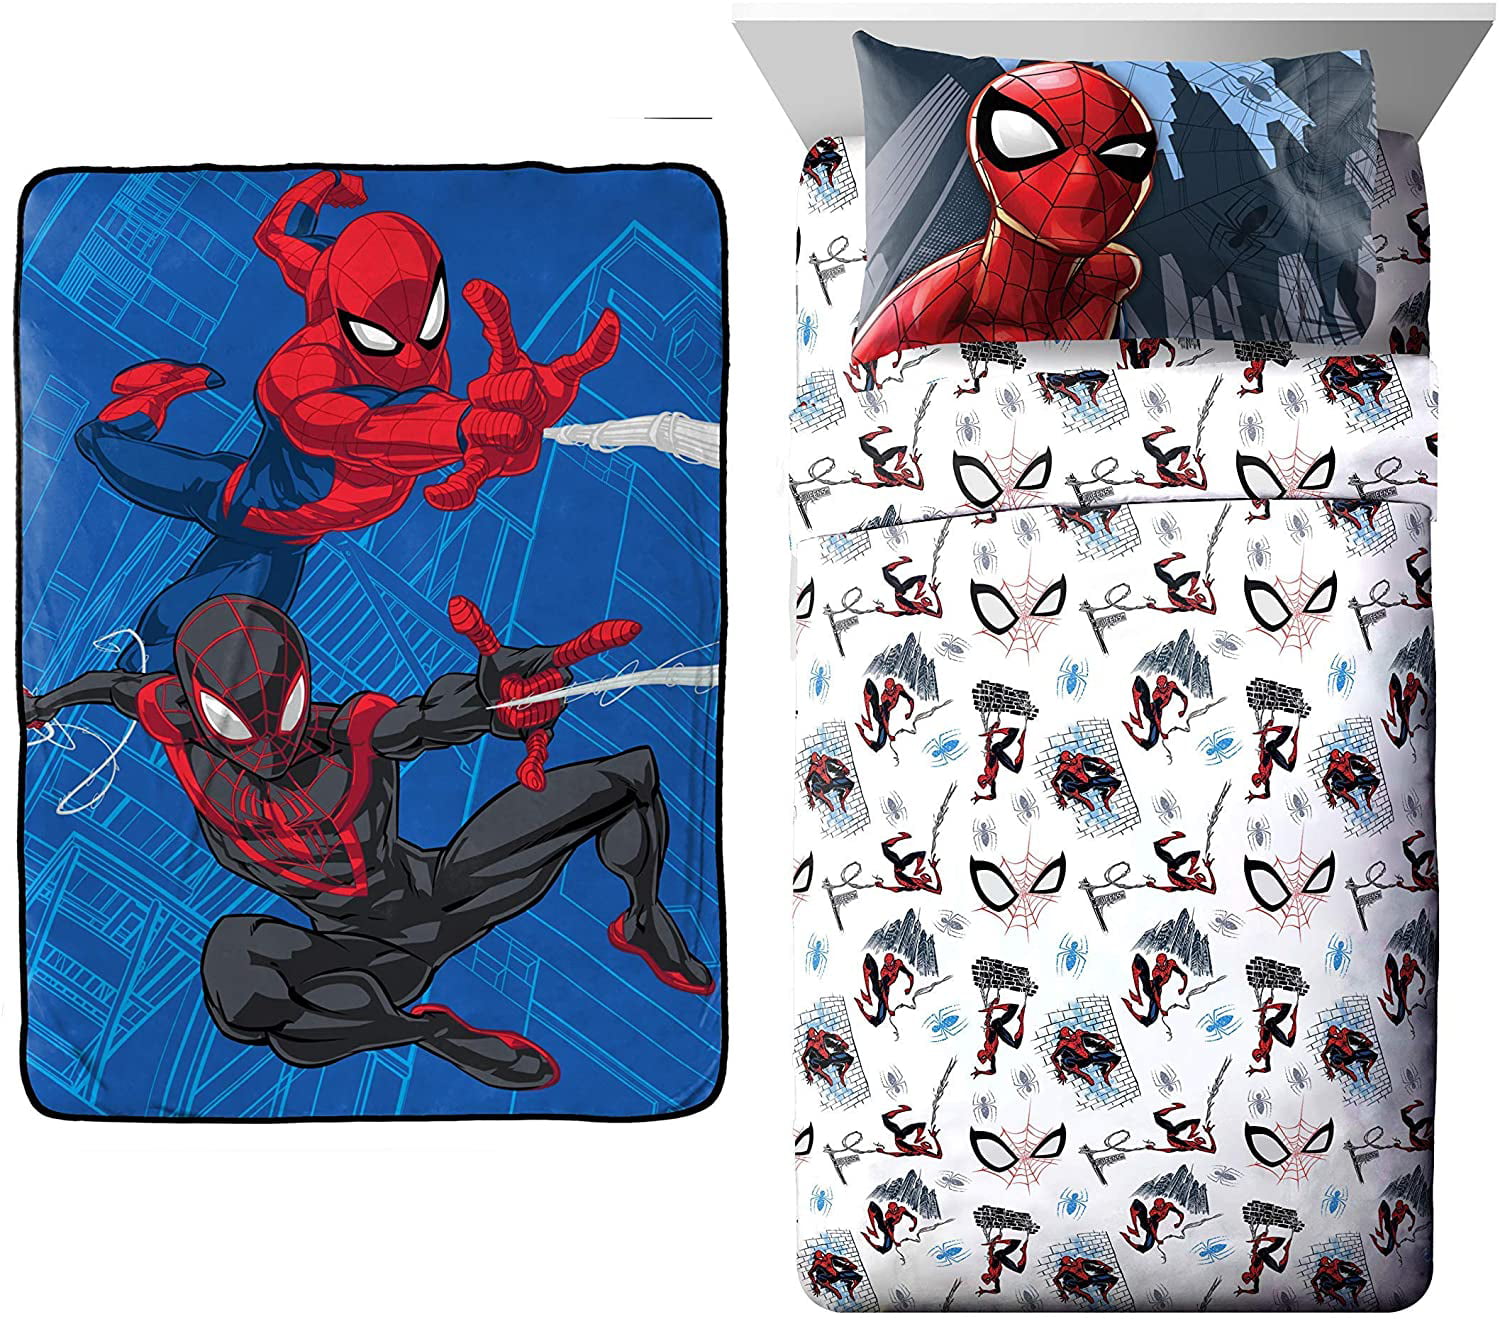 Marvel Spider-Man Luxury Velour Kid's Blanket 60 x 80 inches Soft & Cozy 